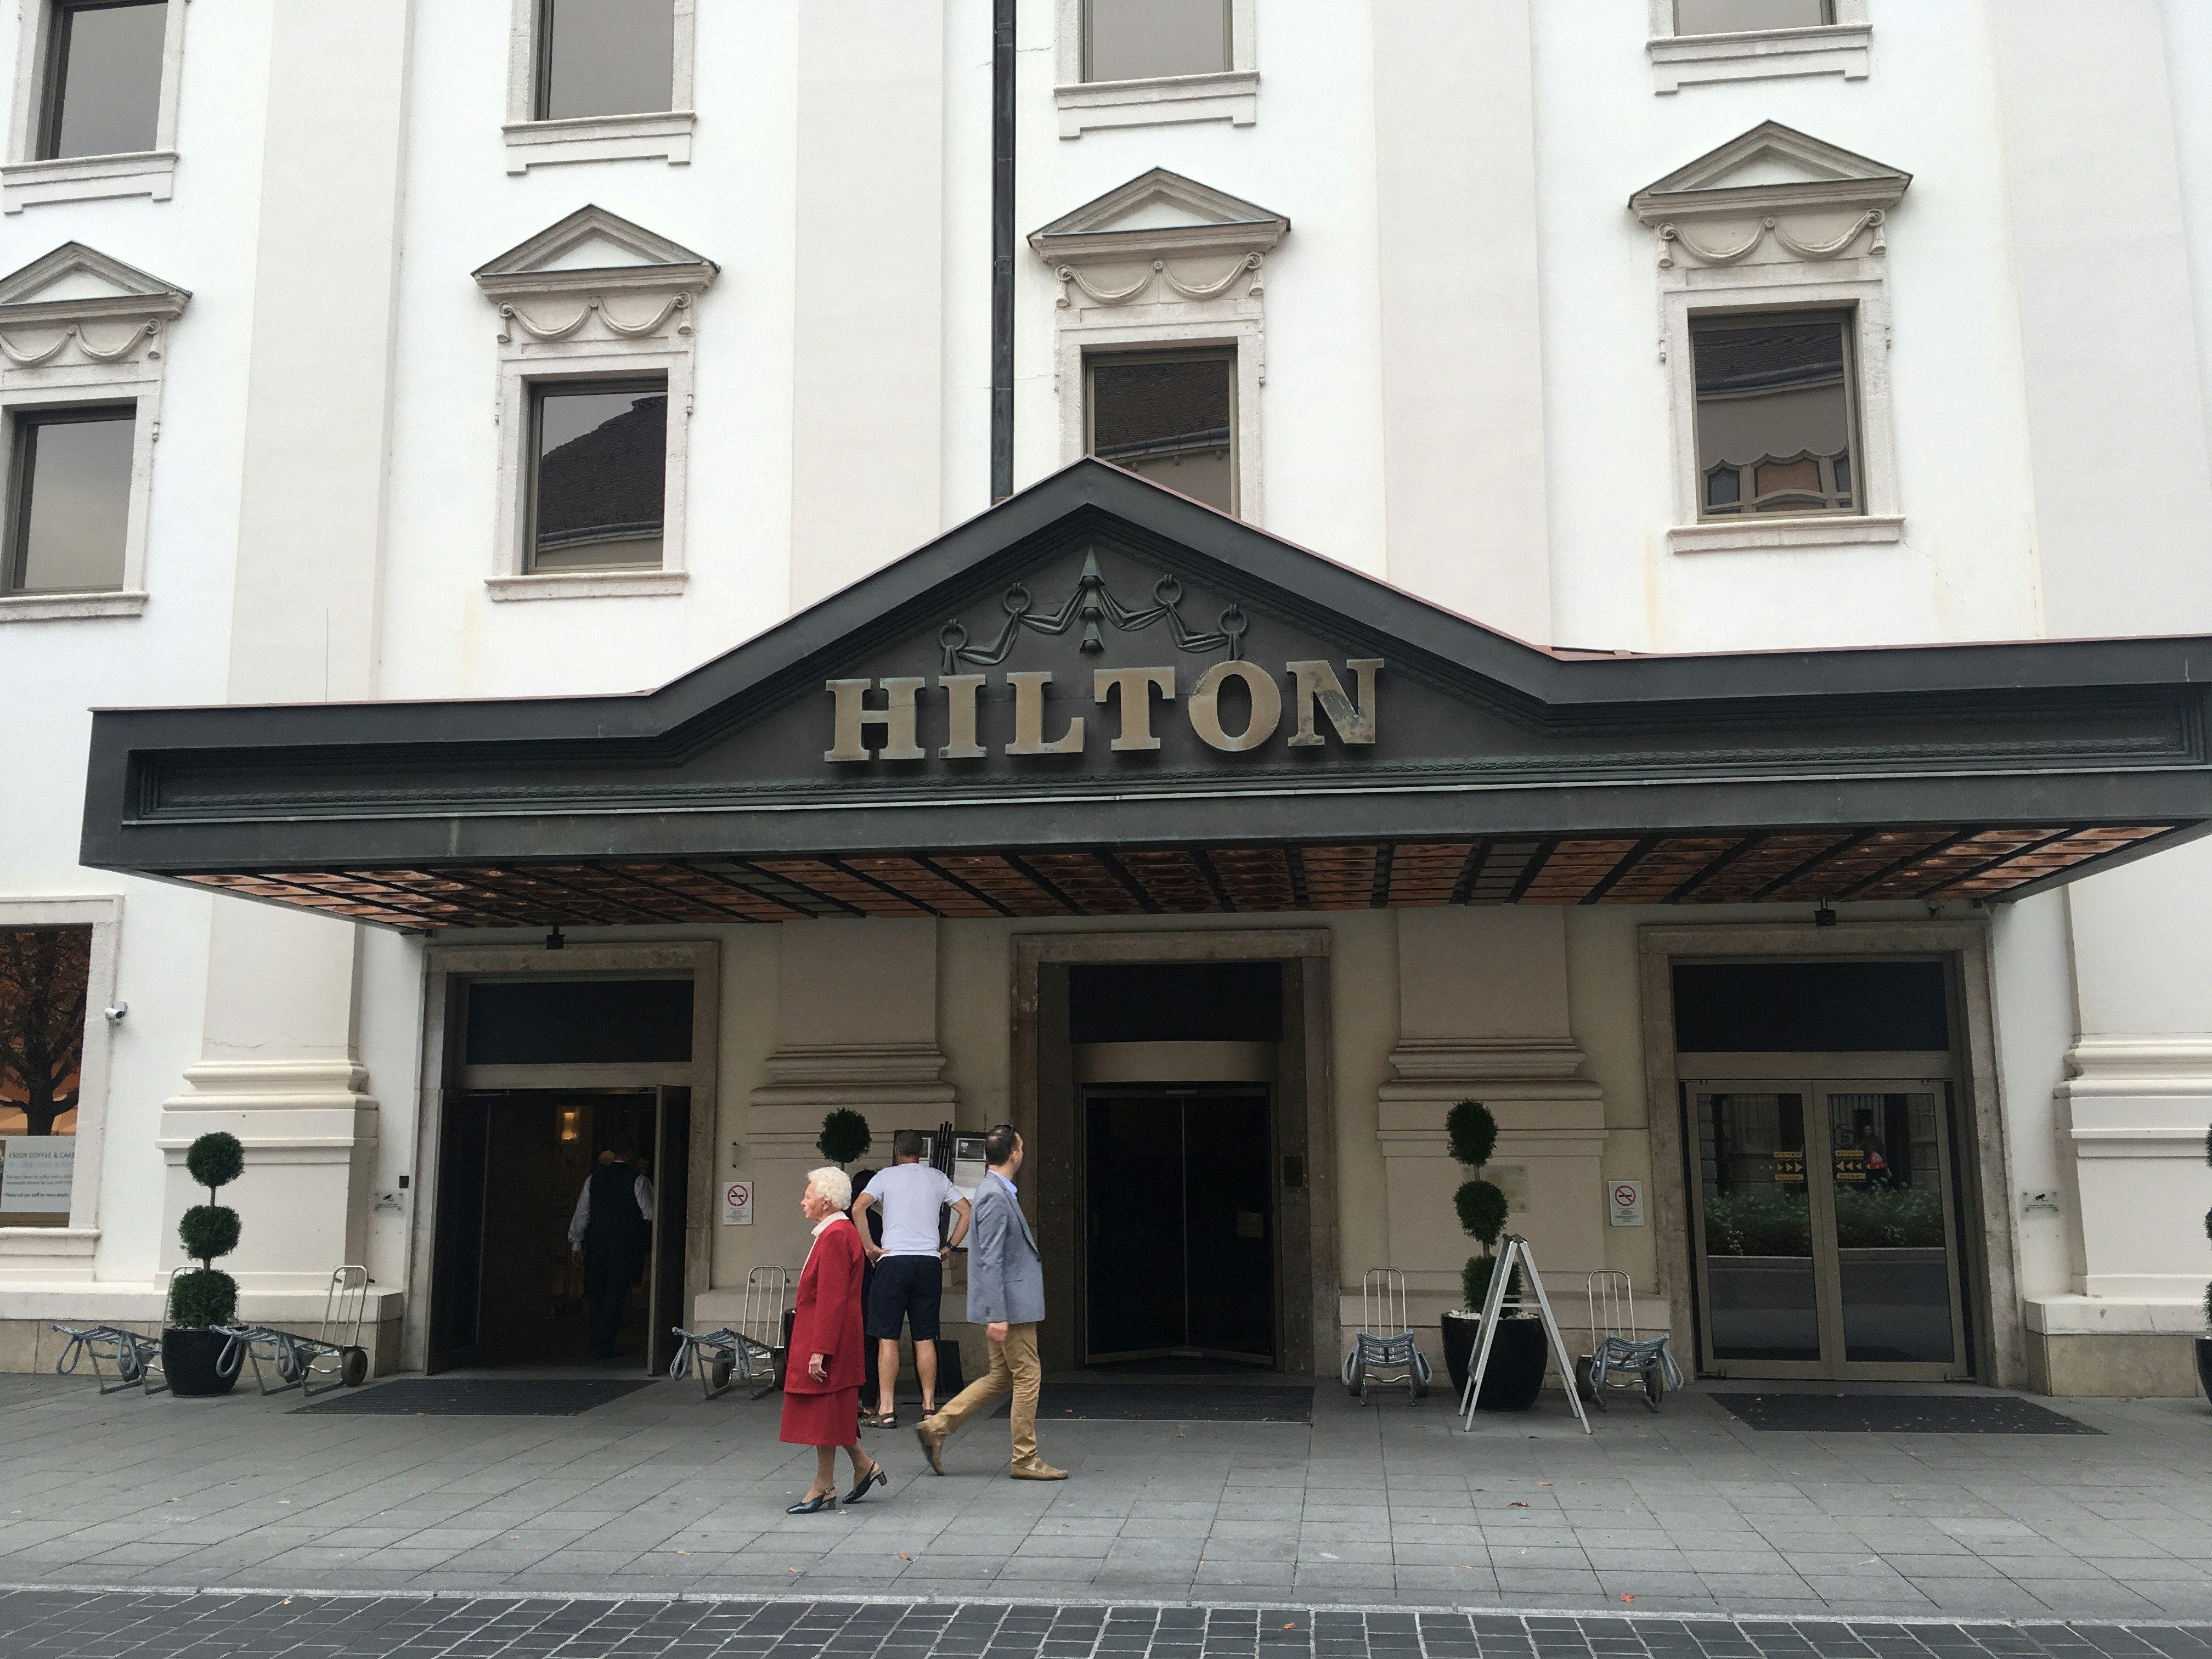 The outside of a Hilton Hotel